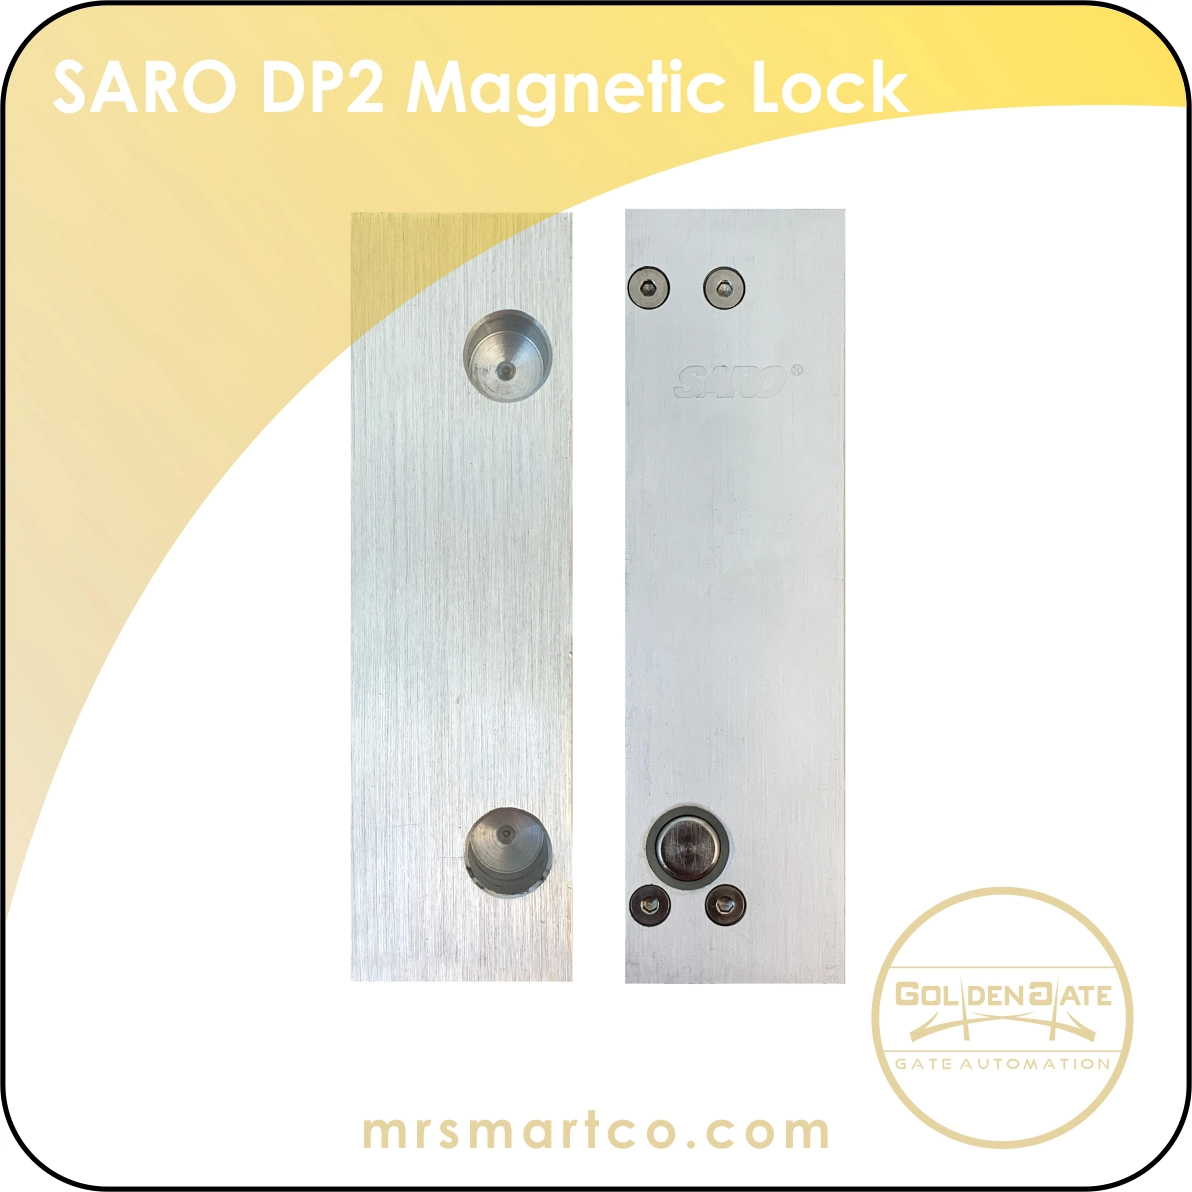 Saro DP2 Magnetic Lock